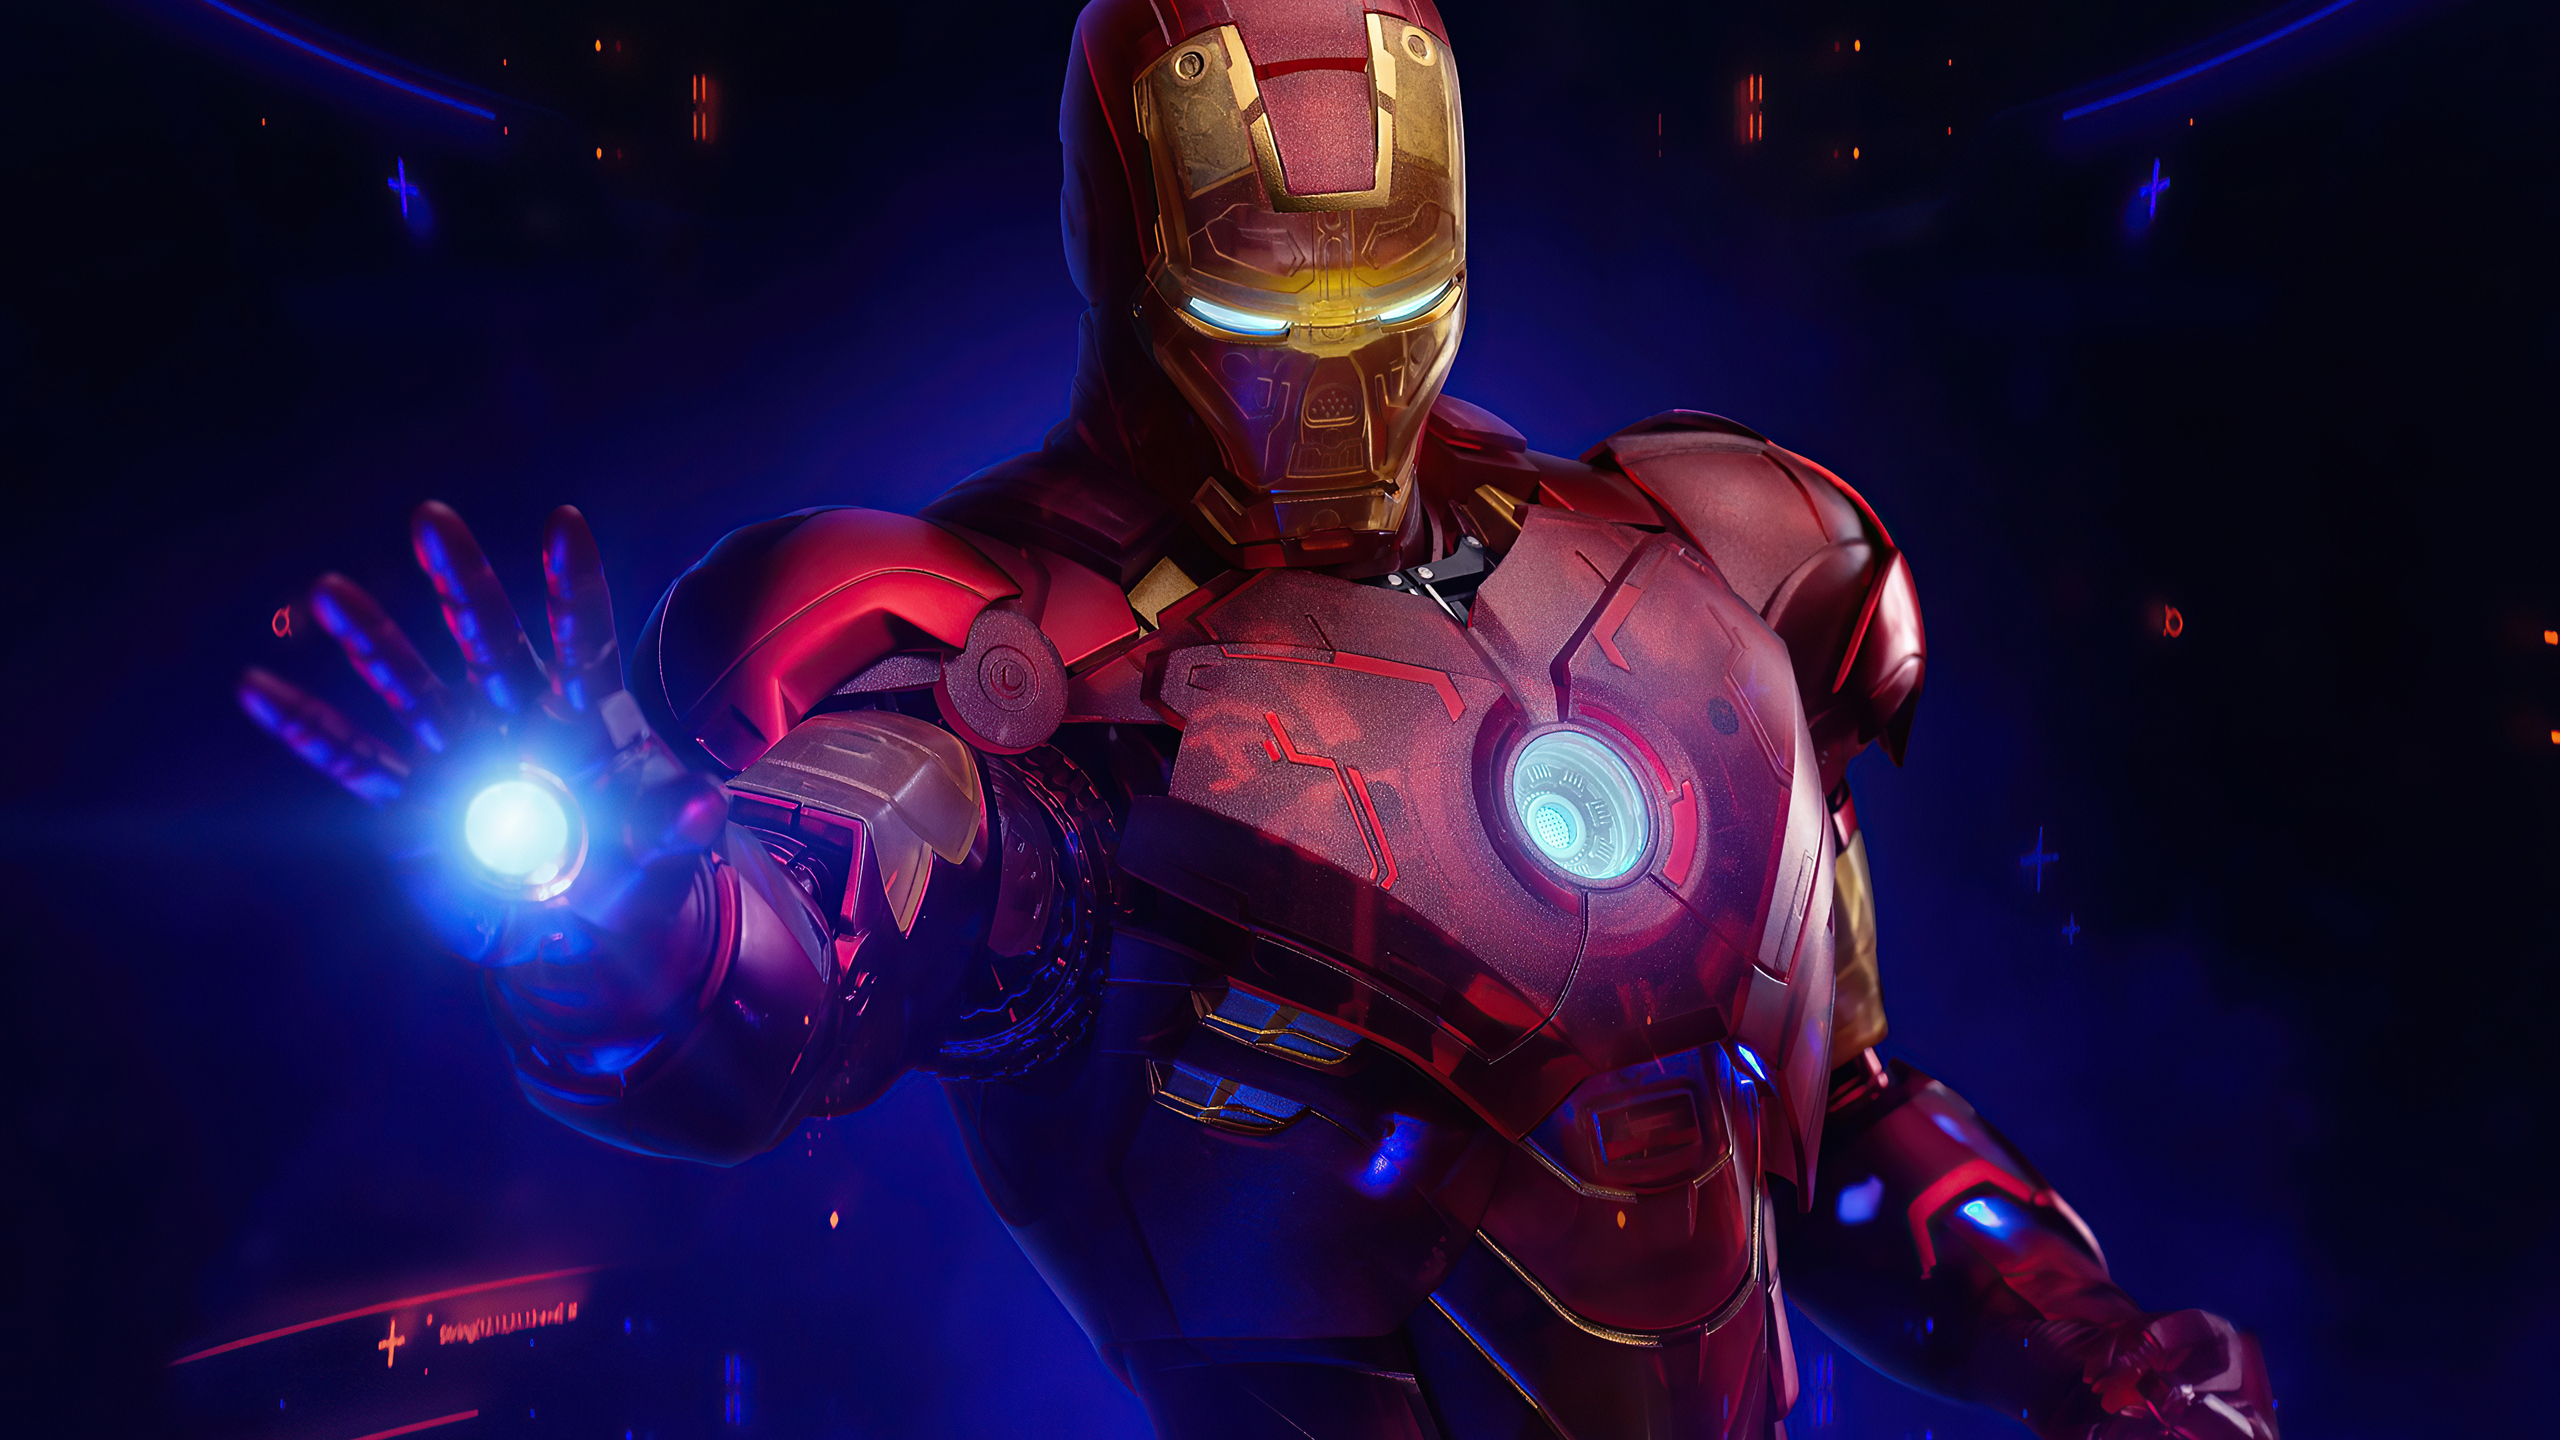 General 2560x1440 Iron Man digital art fan art Marvel Comics superhero